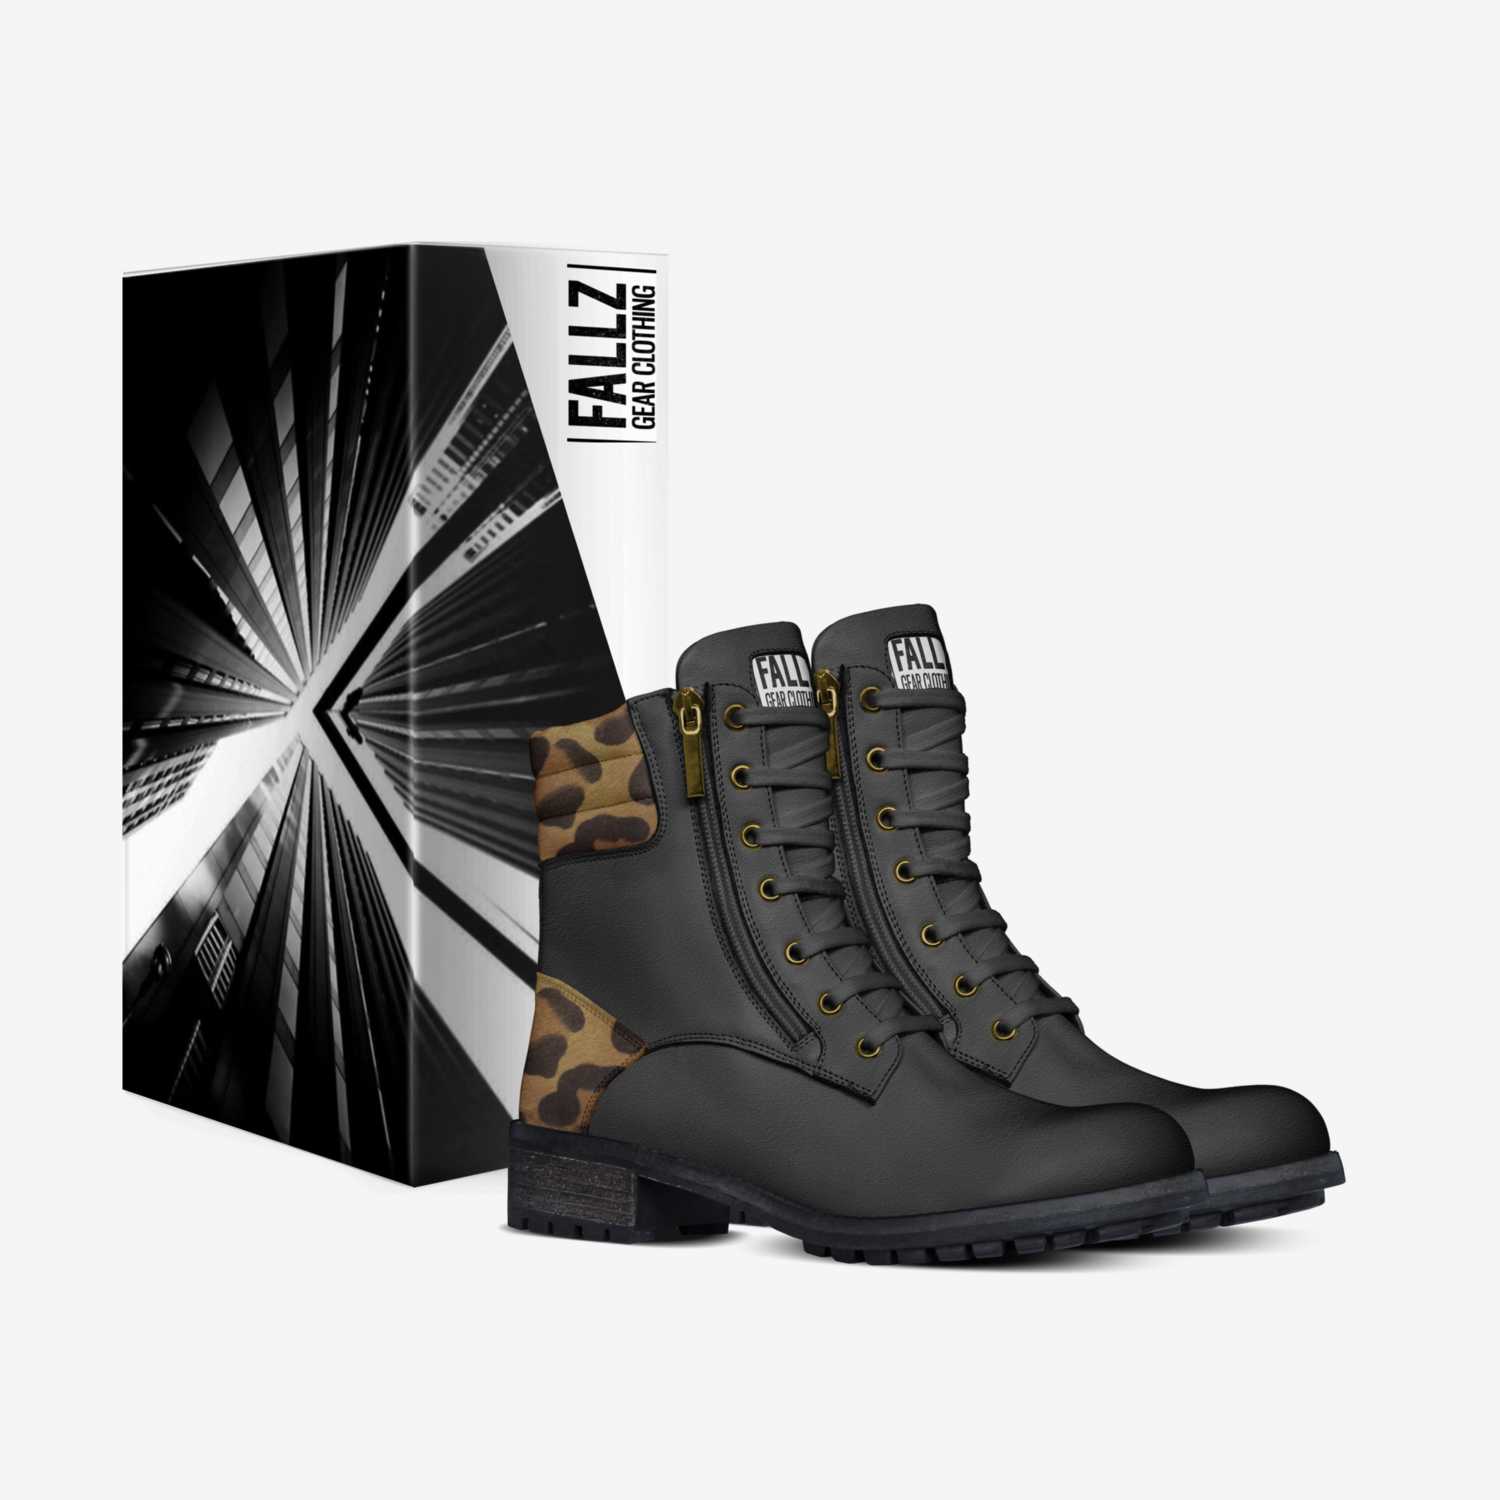 Fallz Gear: Drop  custom made in Italy shoes by Fallz Gear | Box view